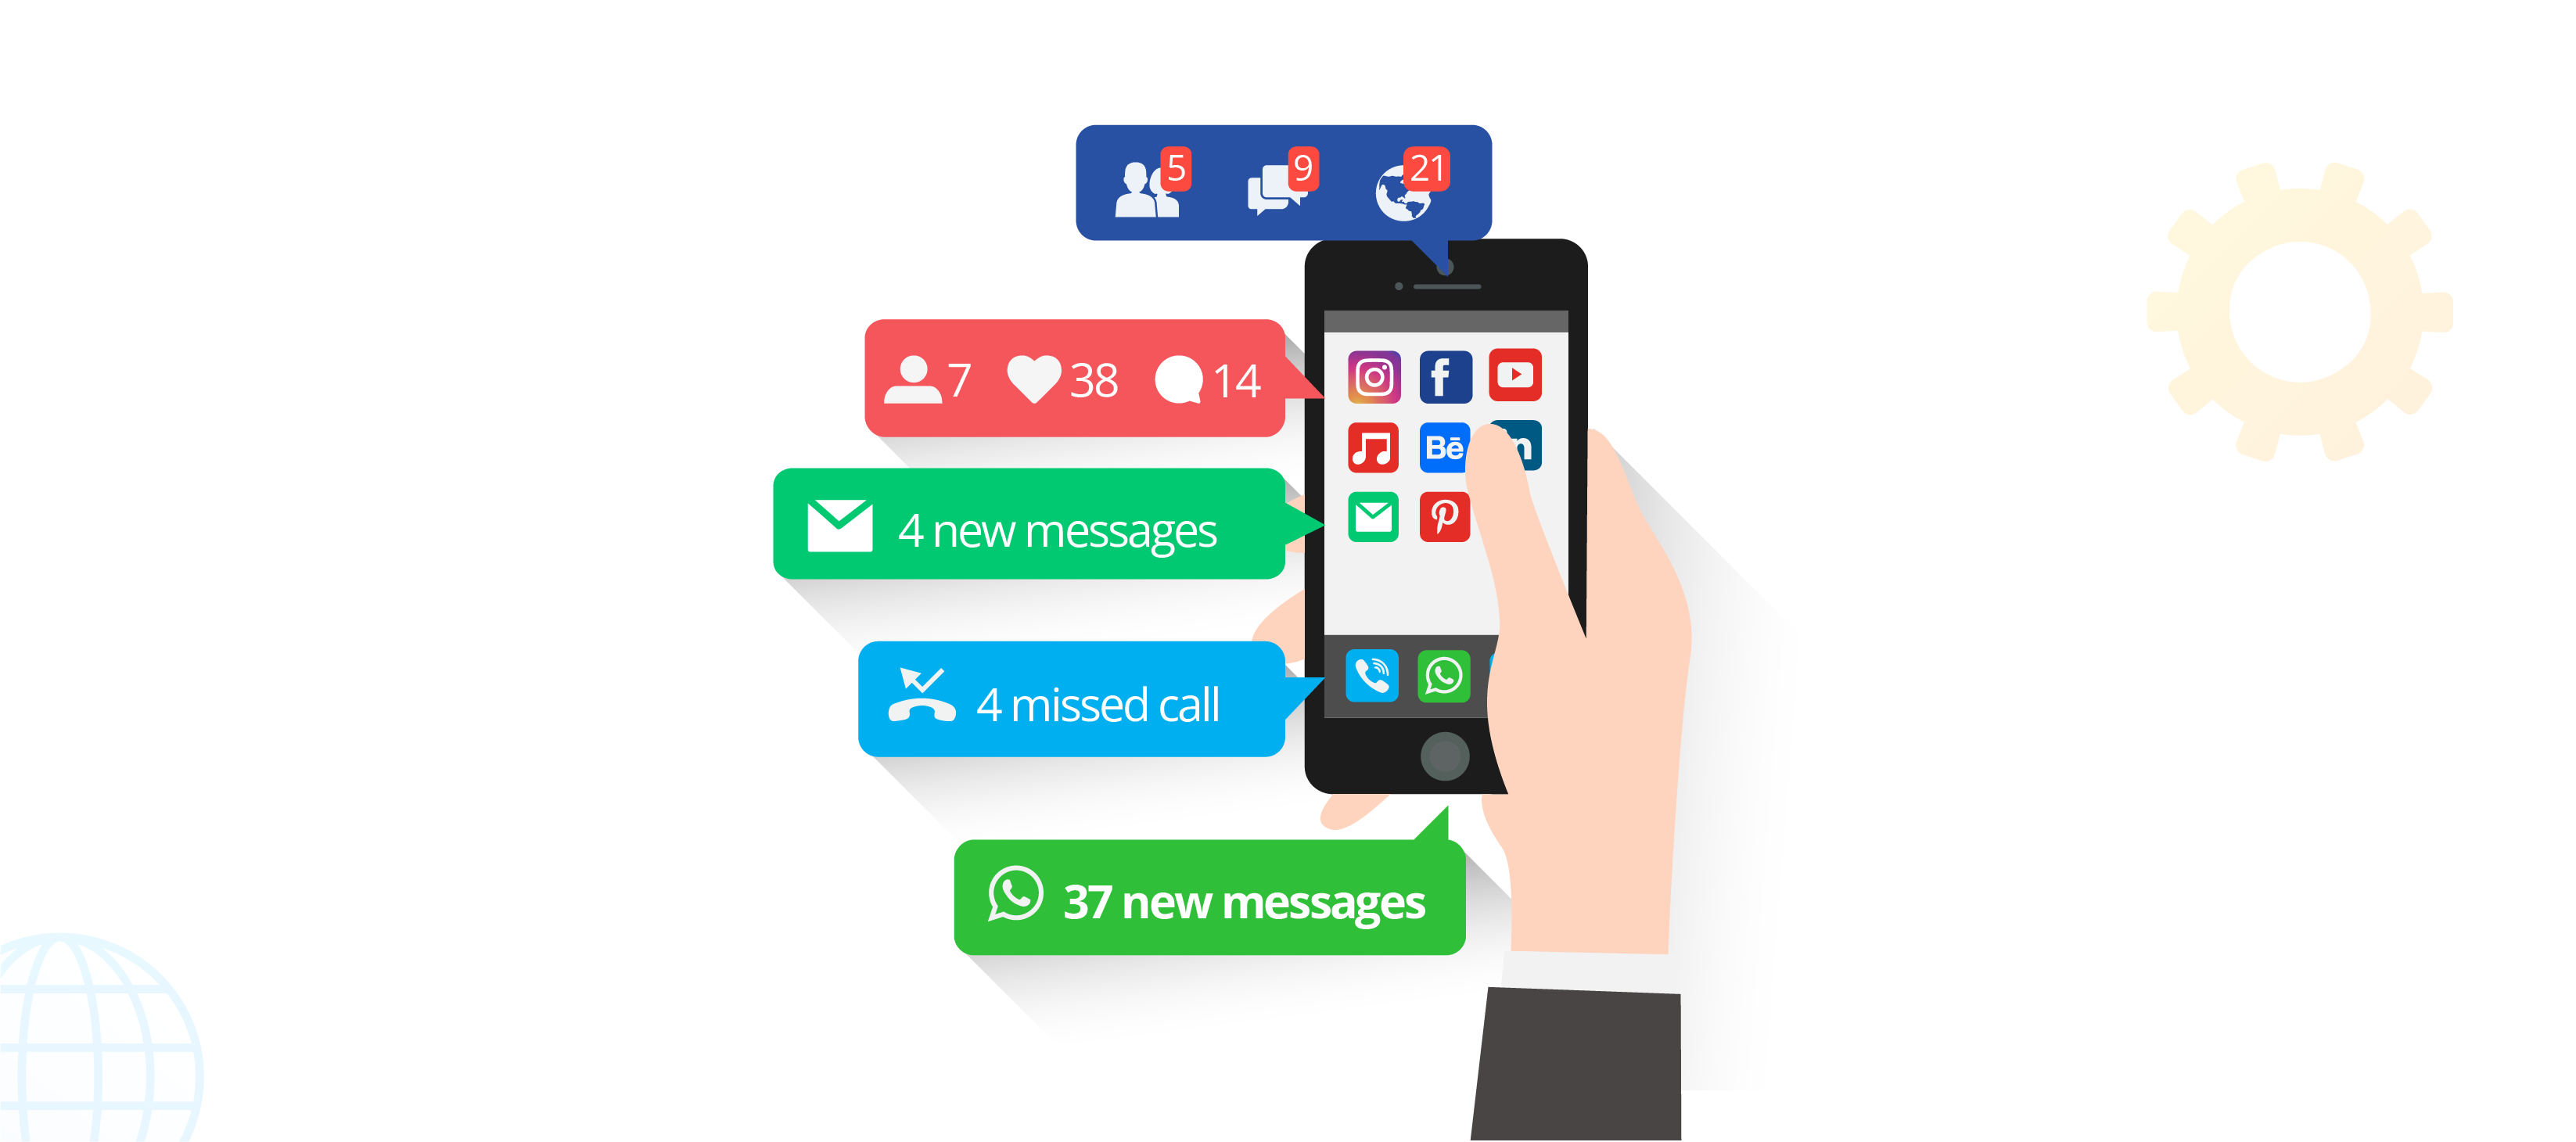 Top messaging apps like Telegram